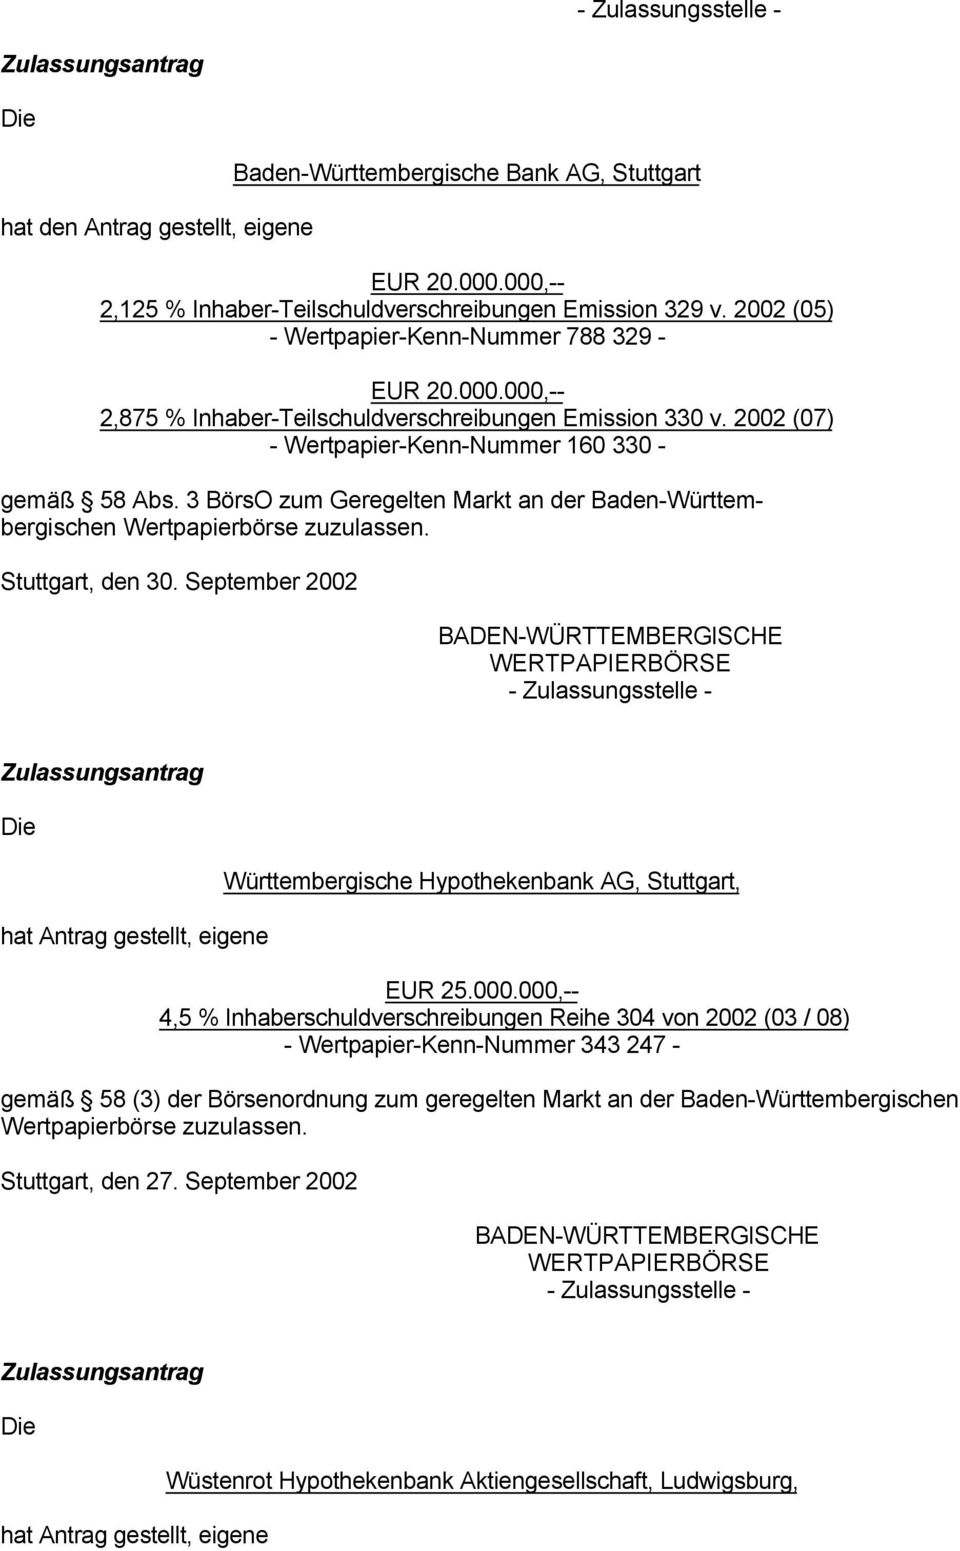 3 BörsO zum Geregelten Markt an Baden-Württembergischen Wertpapierbörse zuzulassen.